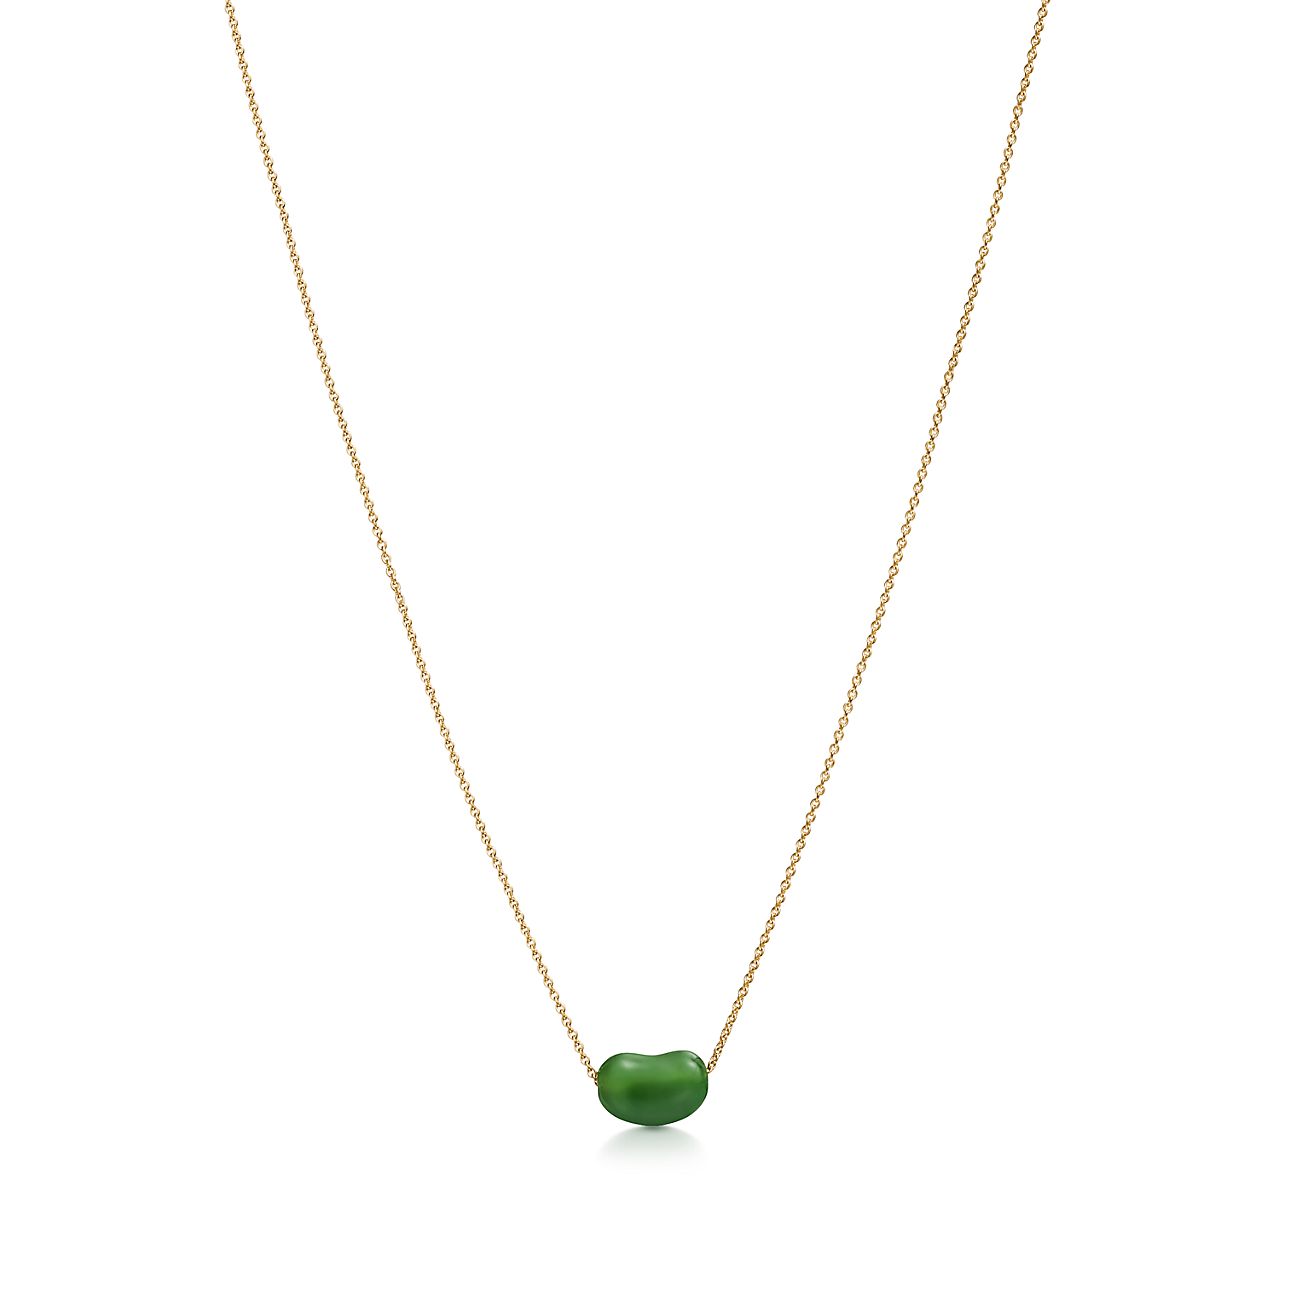 Elsa Peretti®Bean® design Pendant in Yellow Gold with Green Jade, 9 mm